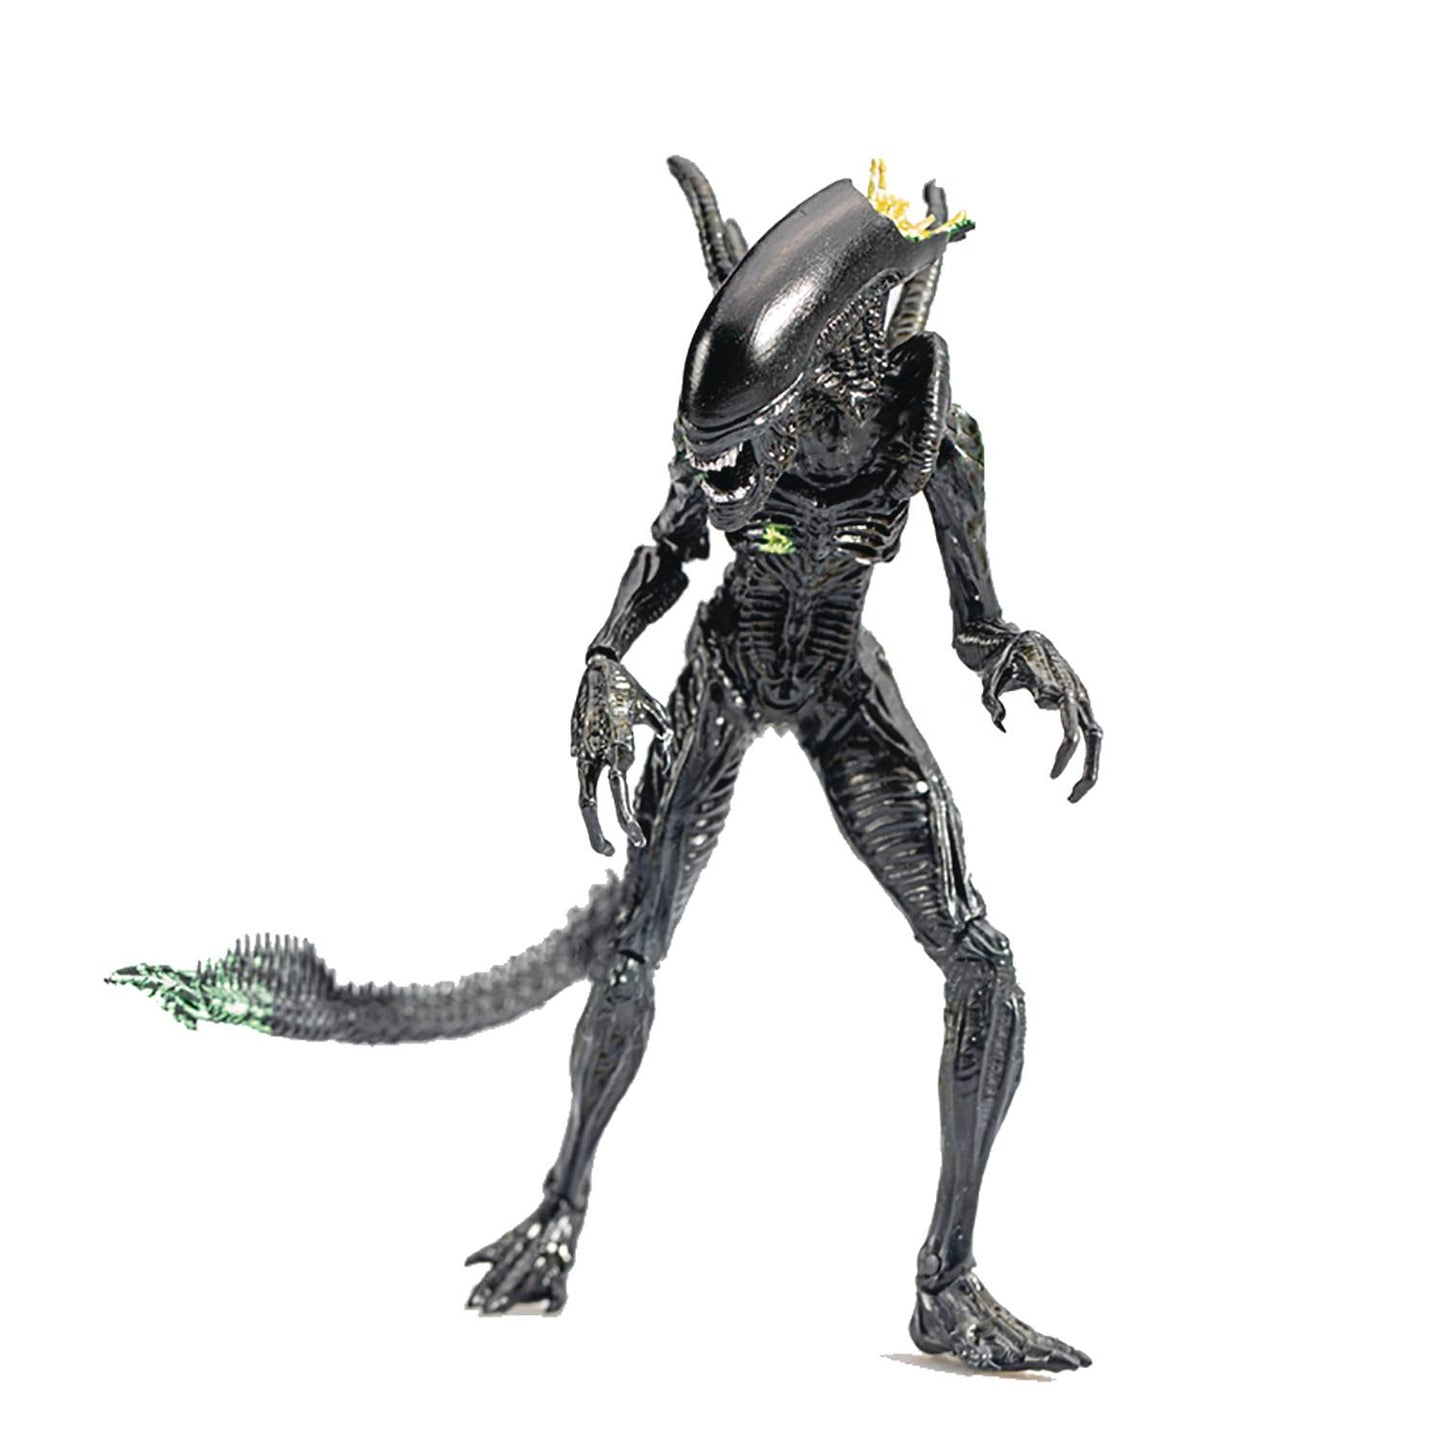 AVP Blowout Alien Warrior 4 Inch Tall Action Figure